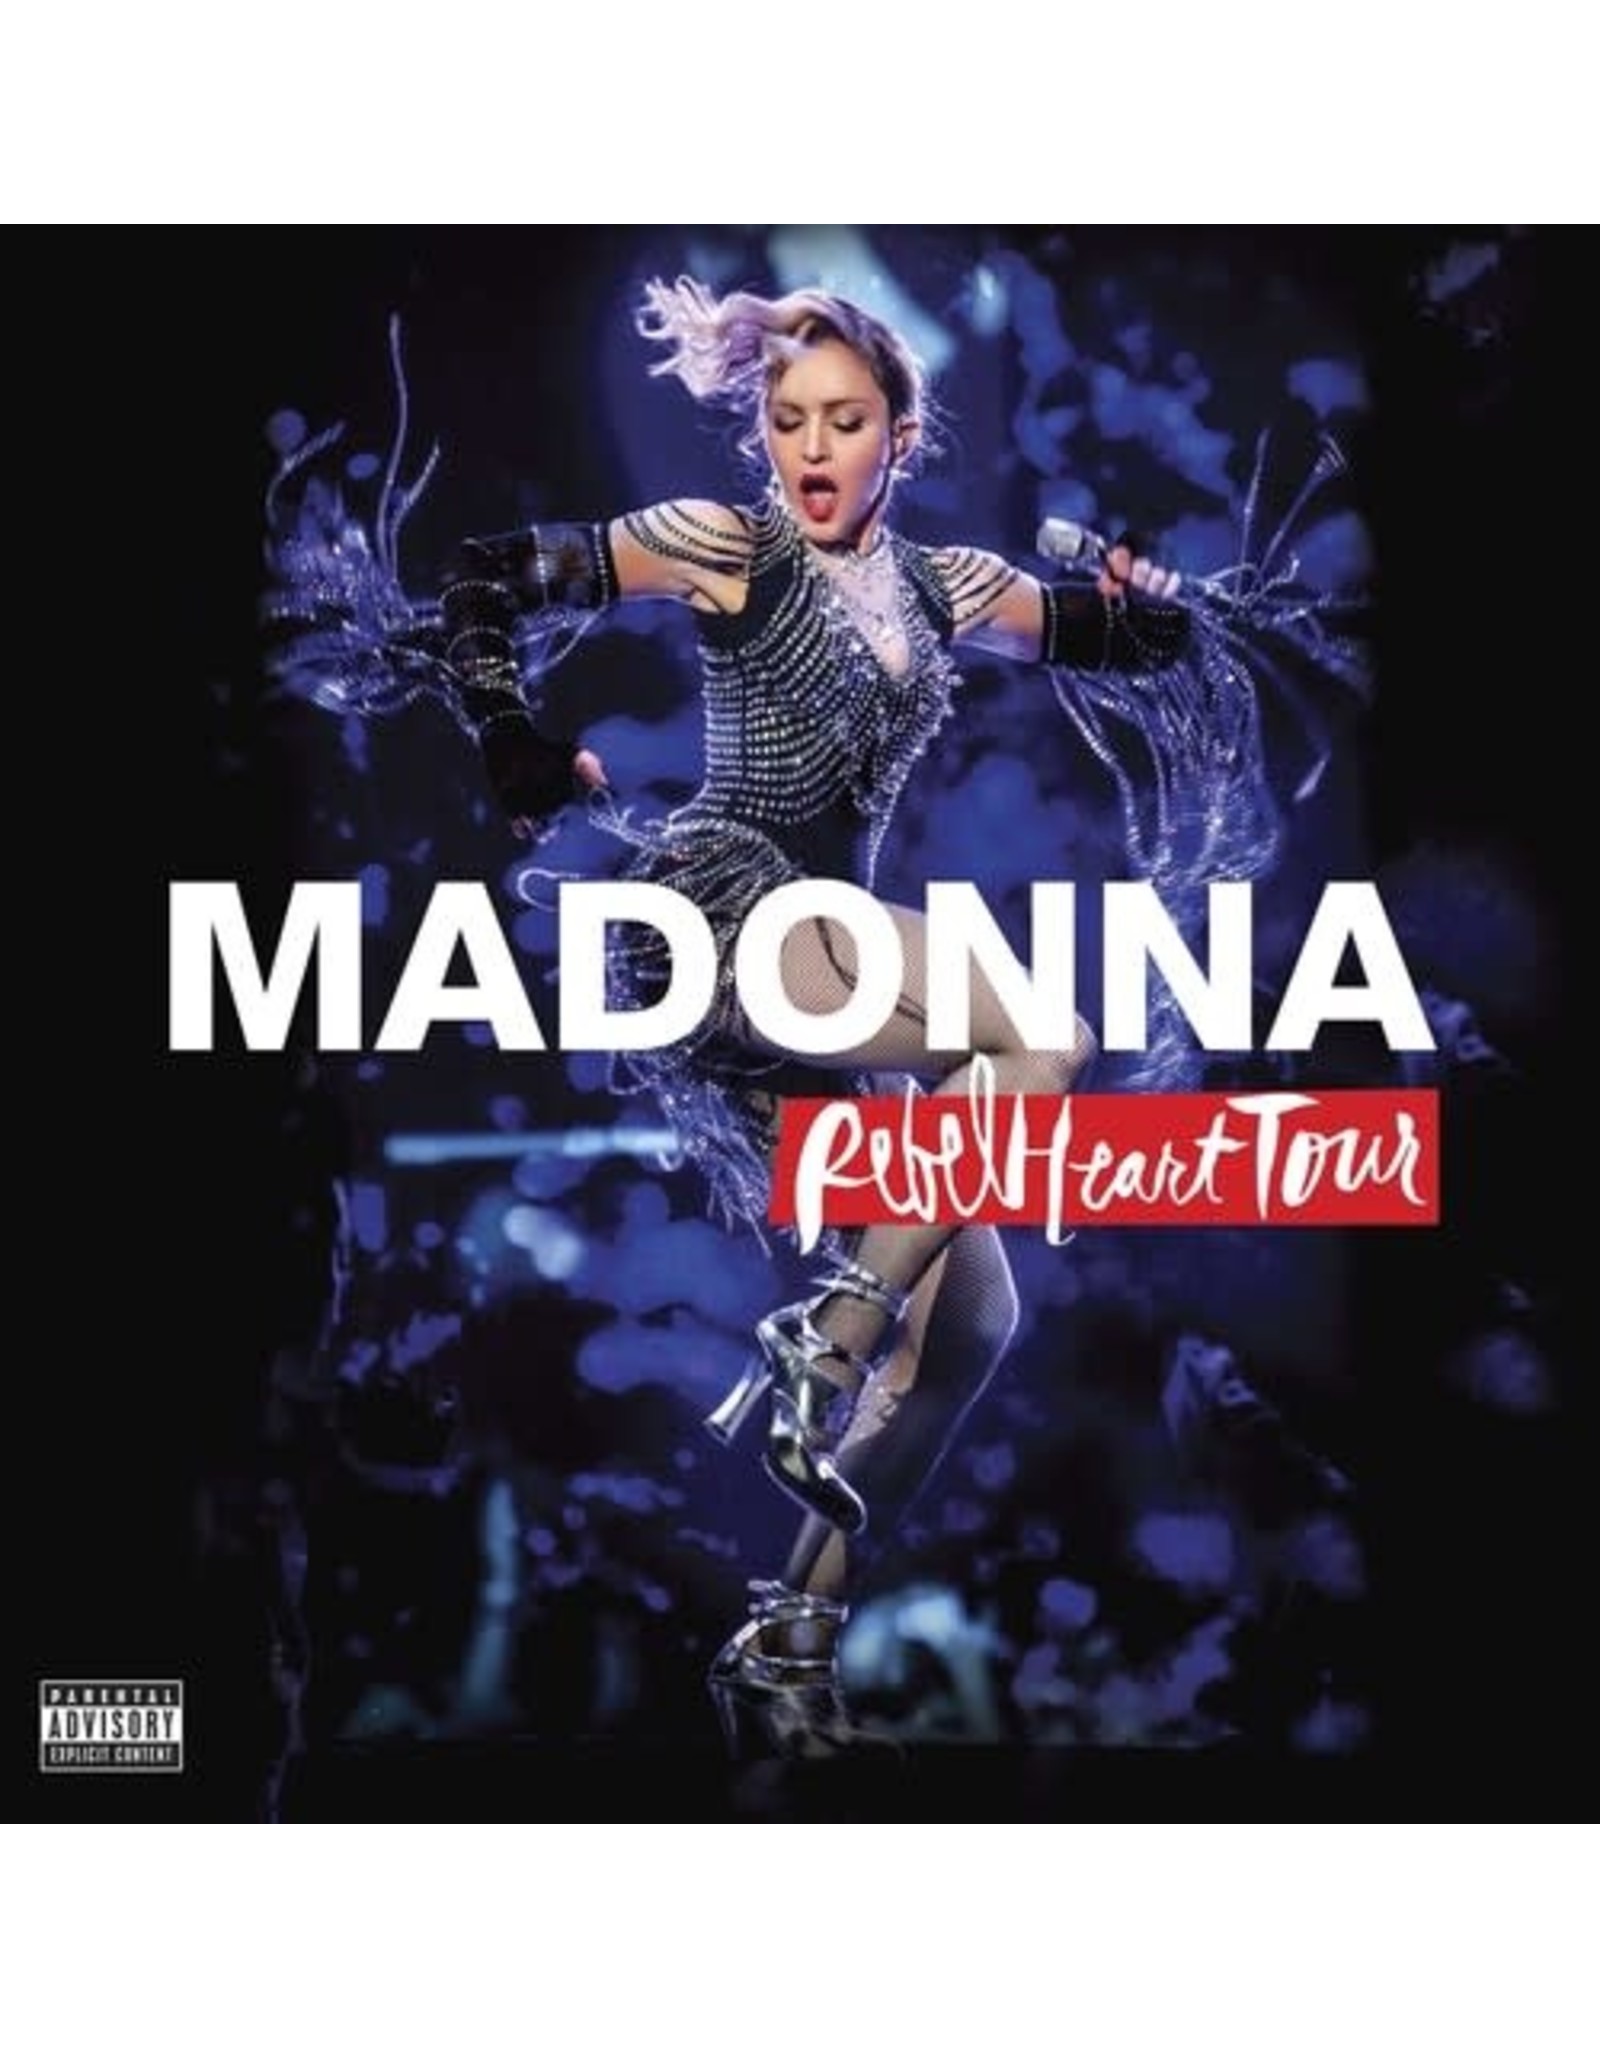 Madonna - Rebel Heart Tour (2LP/purple galaxy swirl/ltd edition)